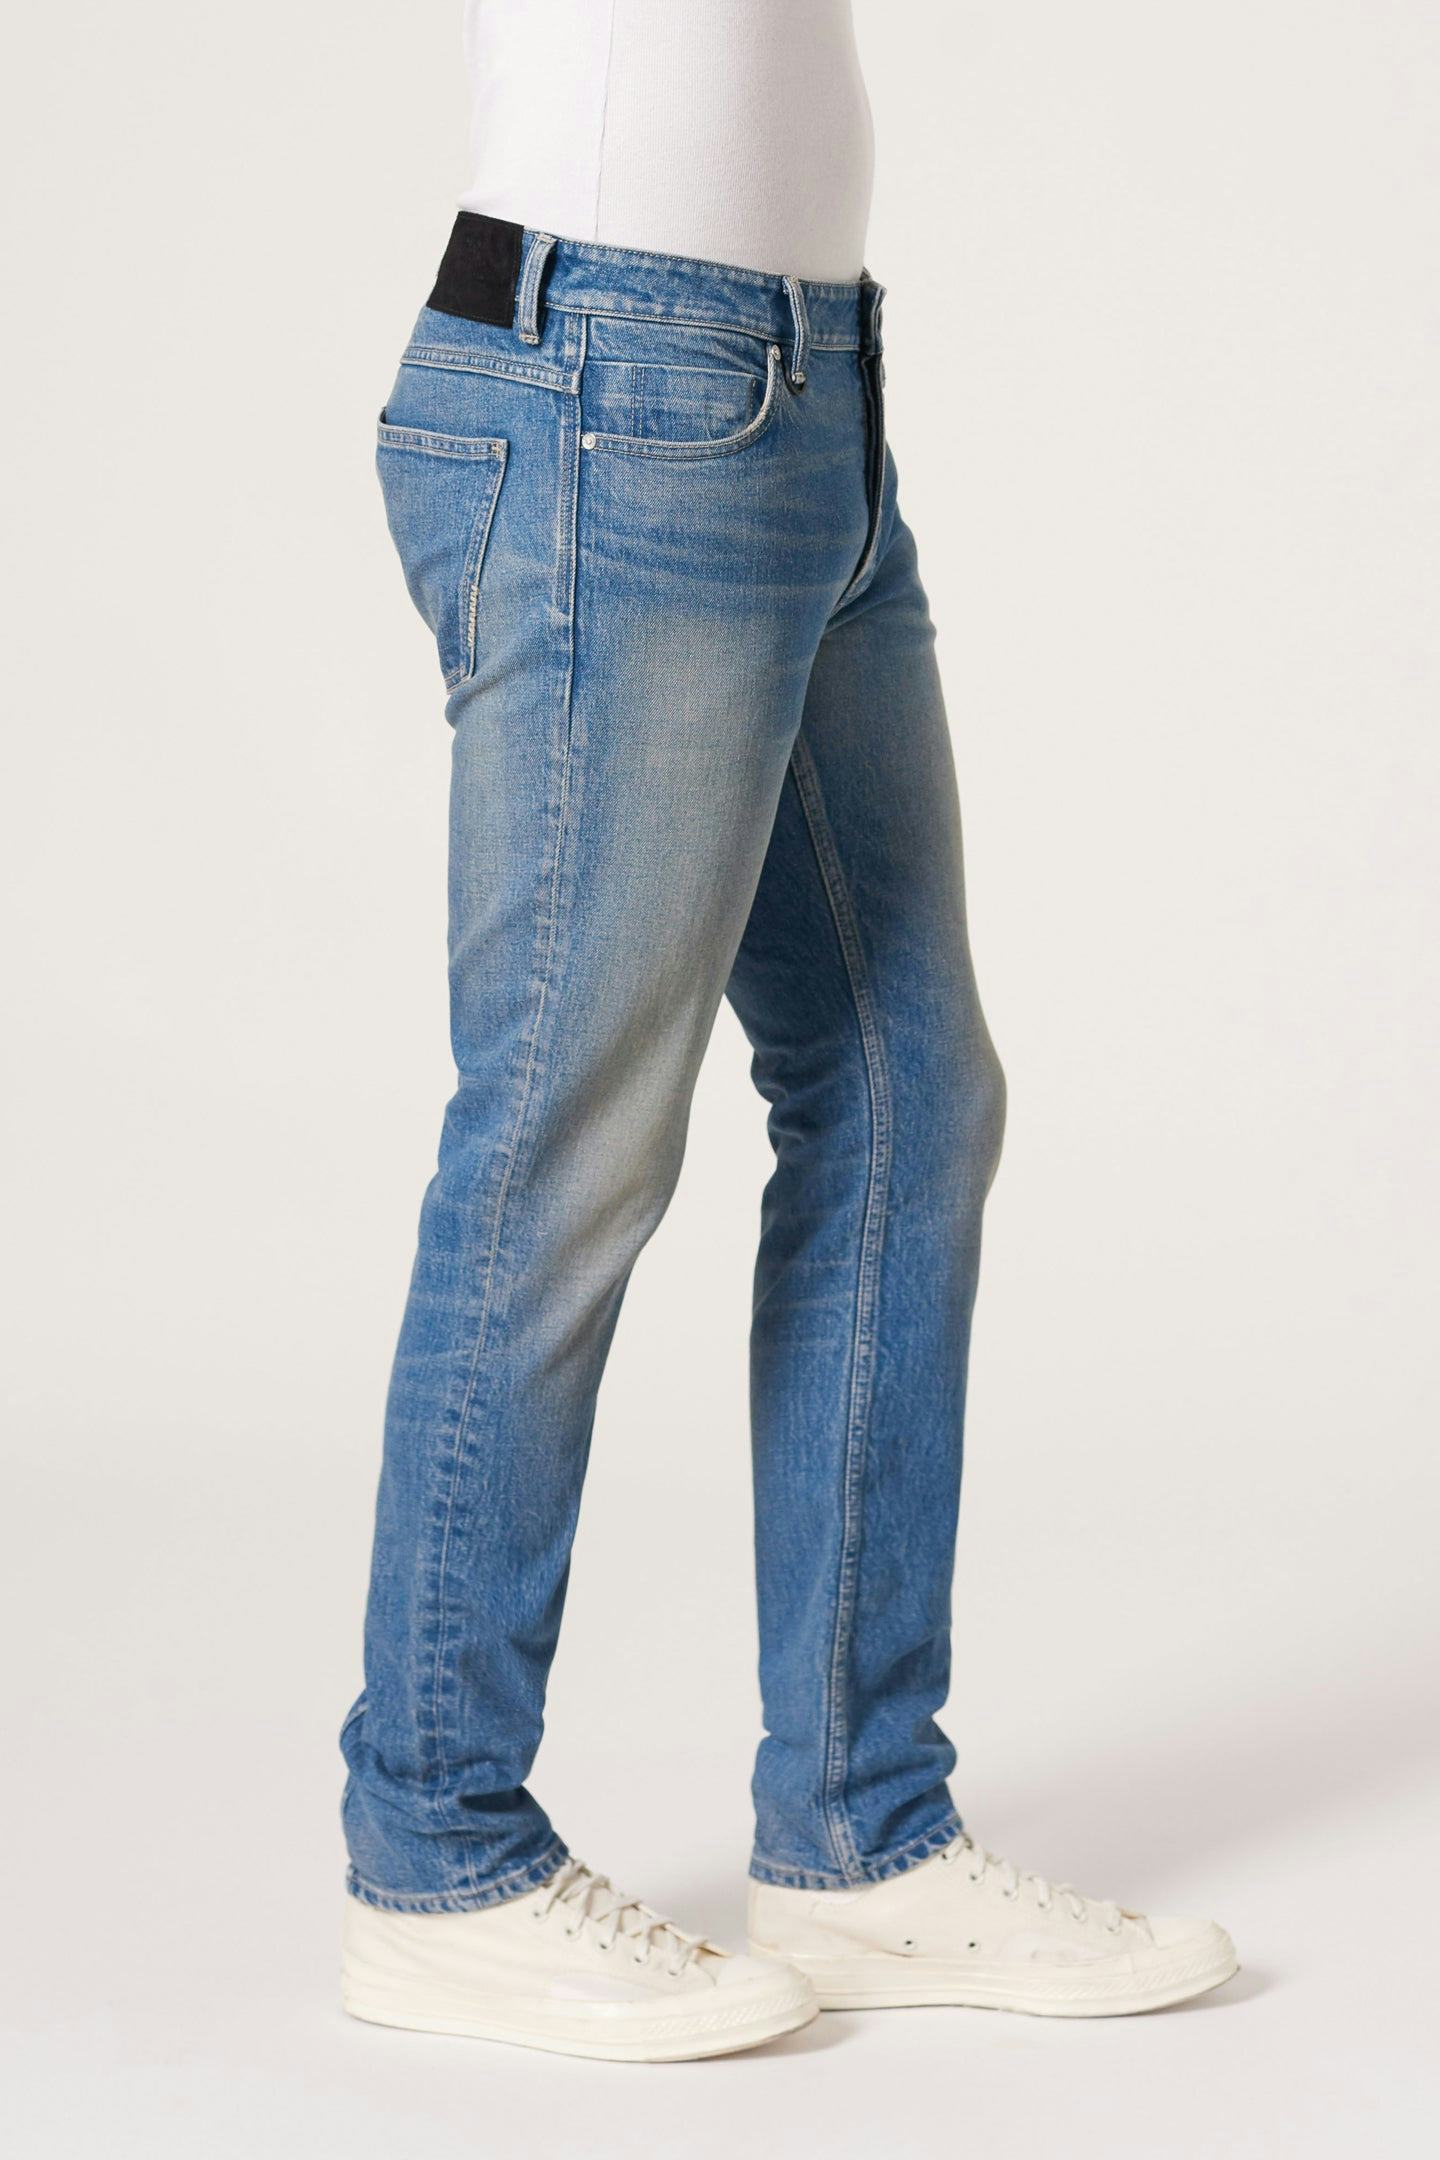 Lou Slim - Alloy Neuw mid darkblue mens-jeans 